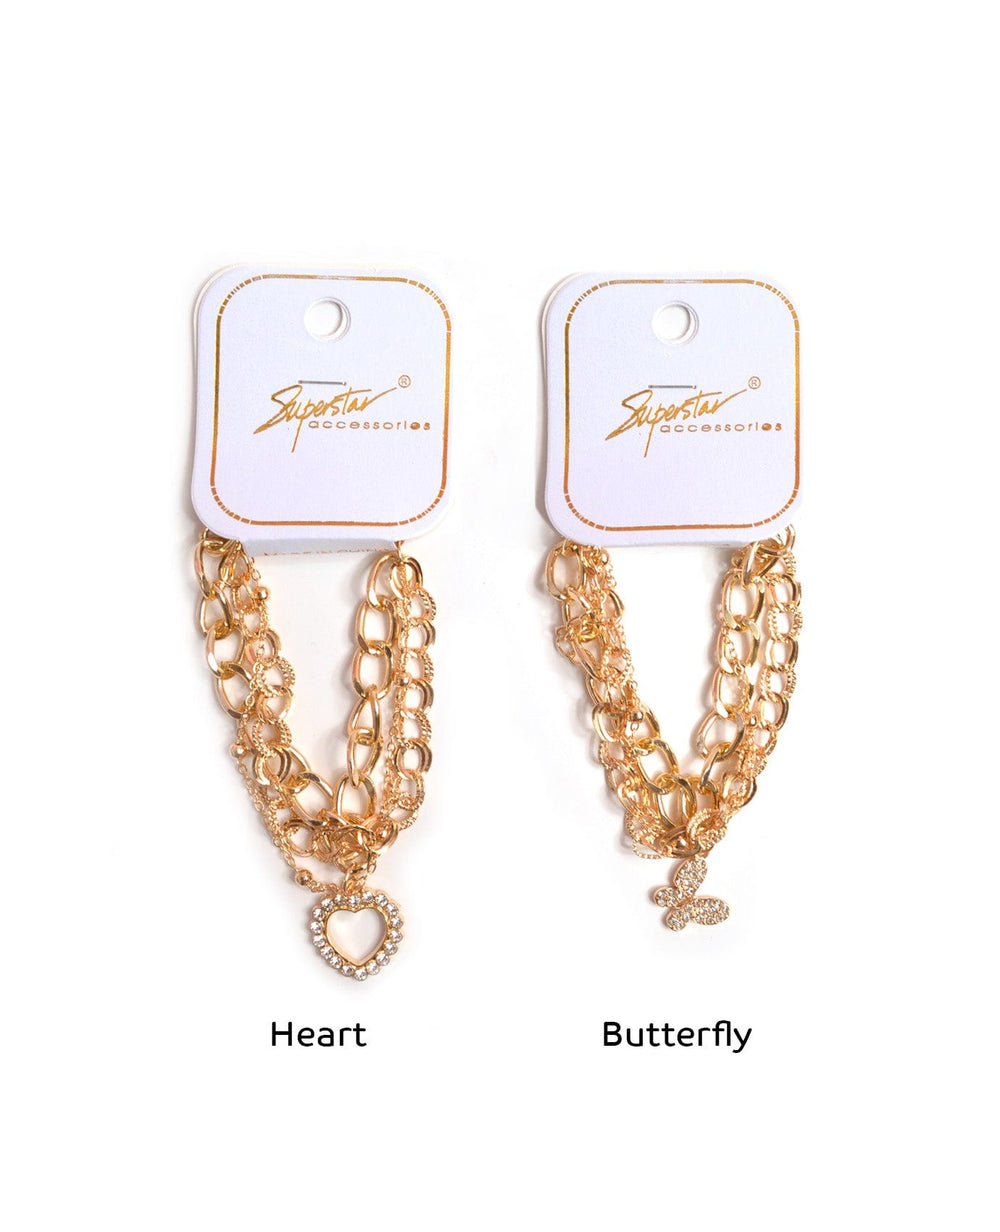 Butterfly and heart bracelet